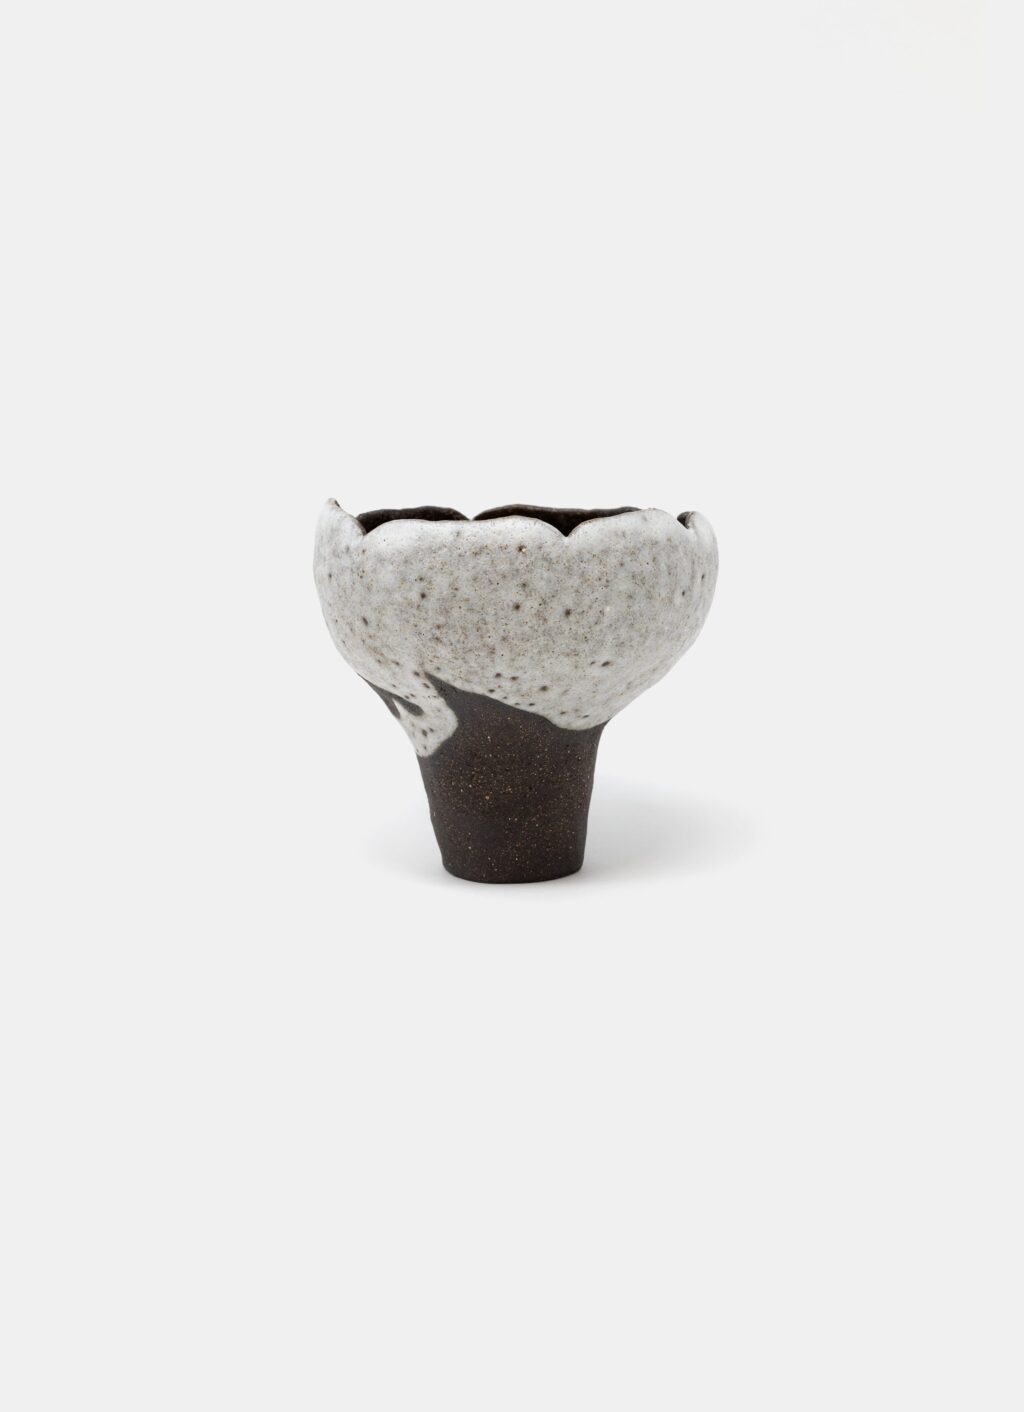 Mano Mani - Ikebana Vase - Dark Stoneware and white glaze - 2